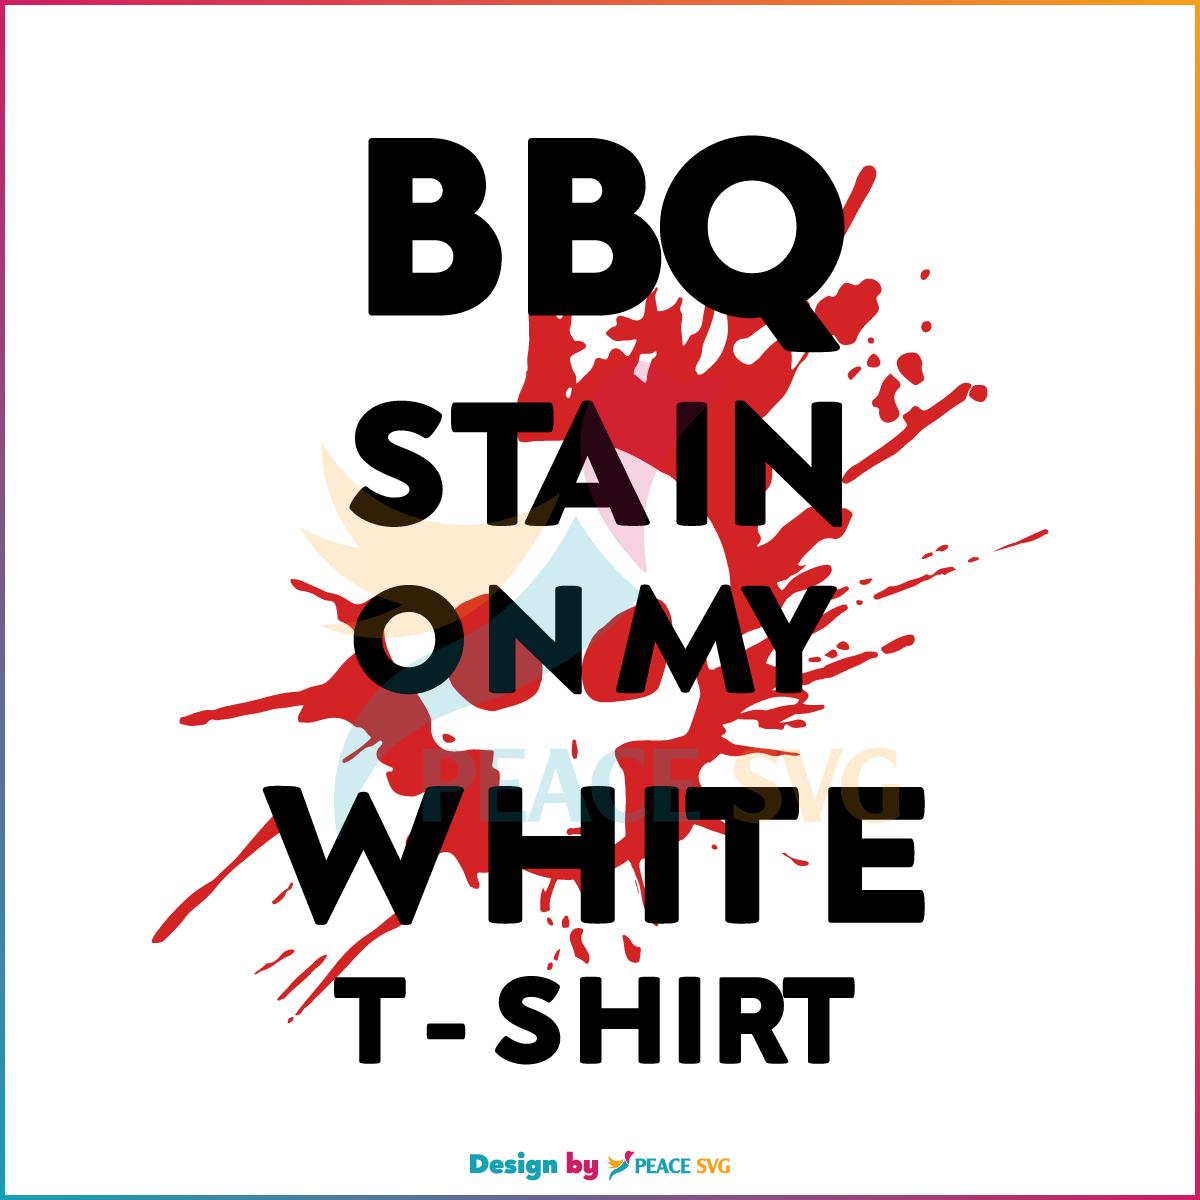 Bbq Stain On My White Shirt Tim Mcgraw Song Lyrics SVG